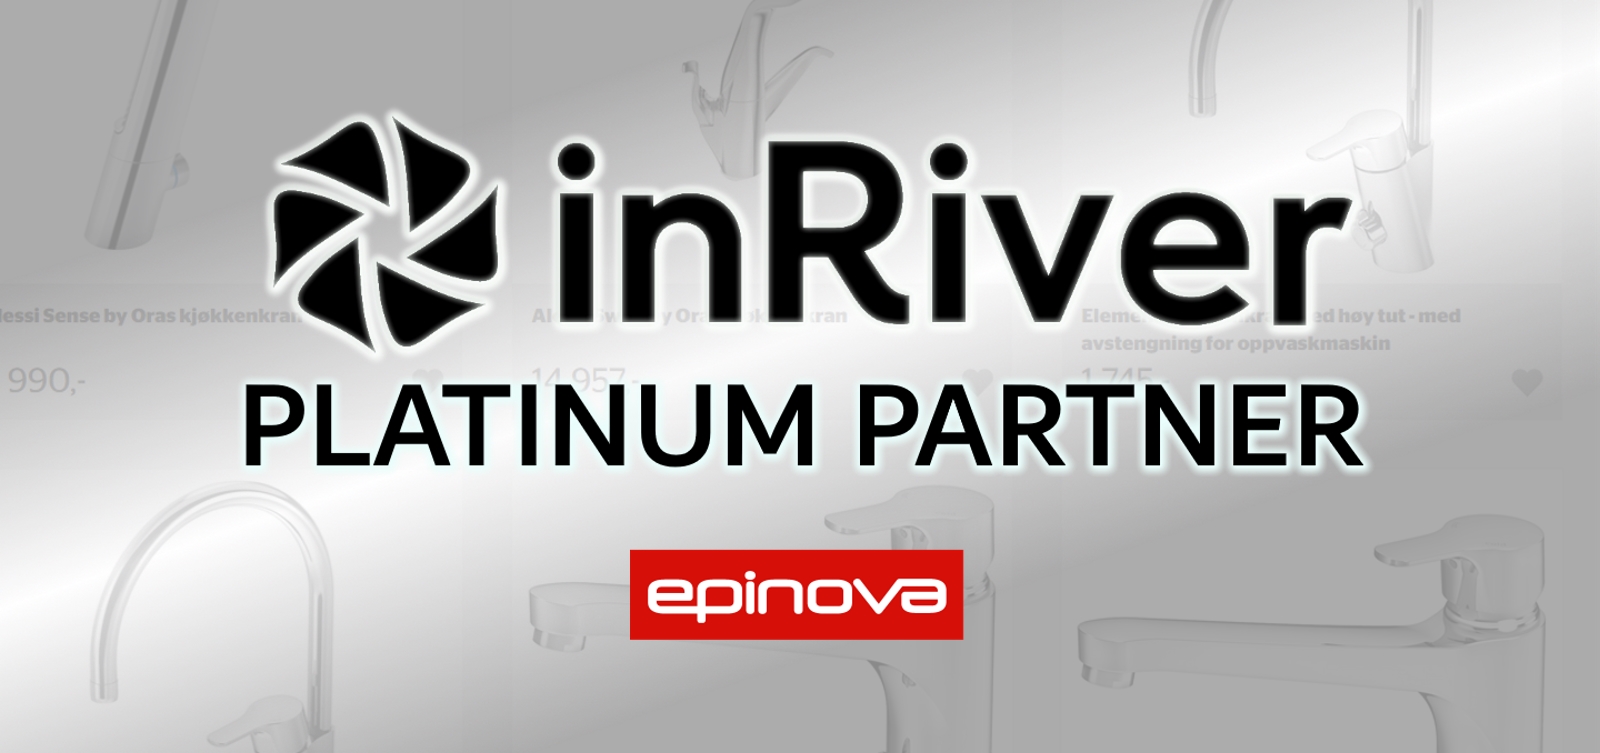 Epinova er inRiver Platinum Partner